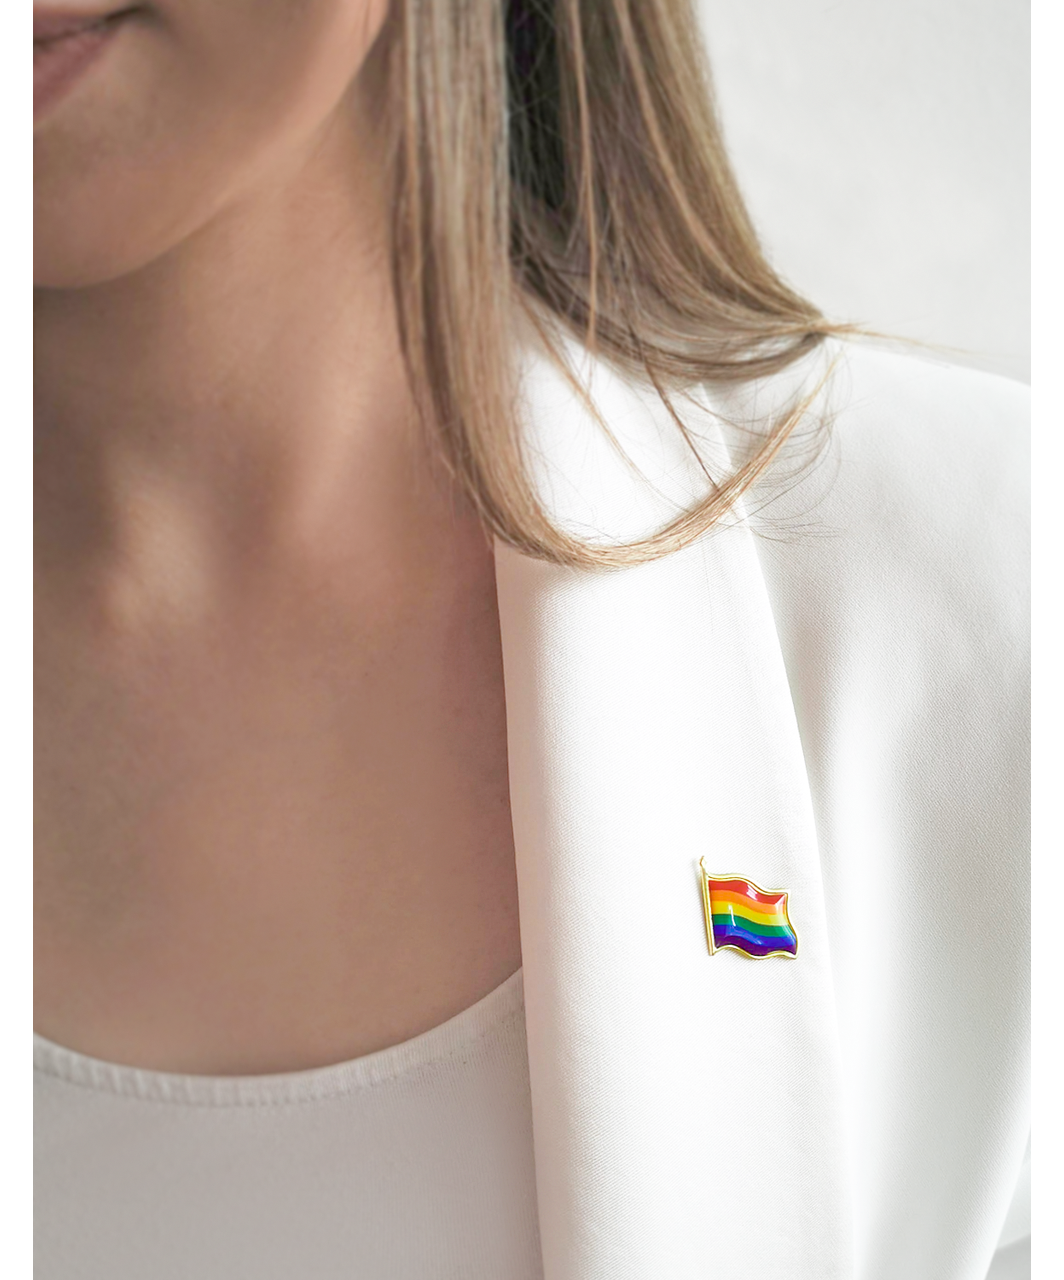 Rainbow Pride петличный значок флага ЛГБТ